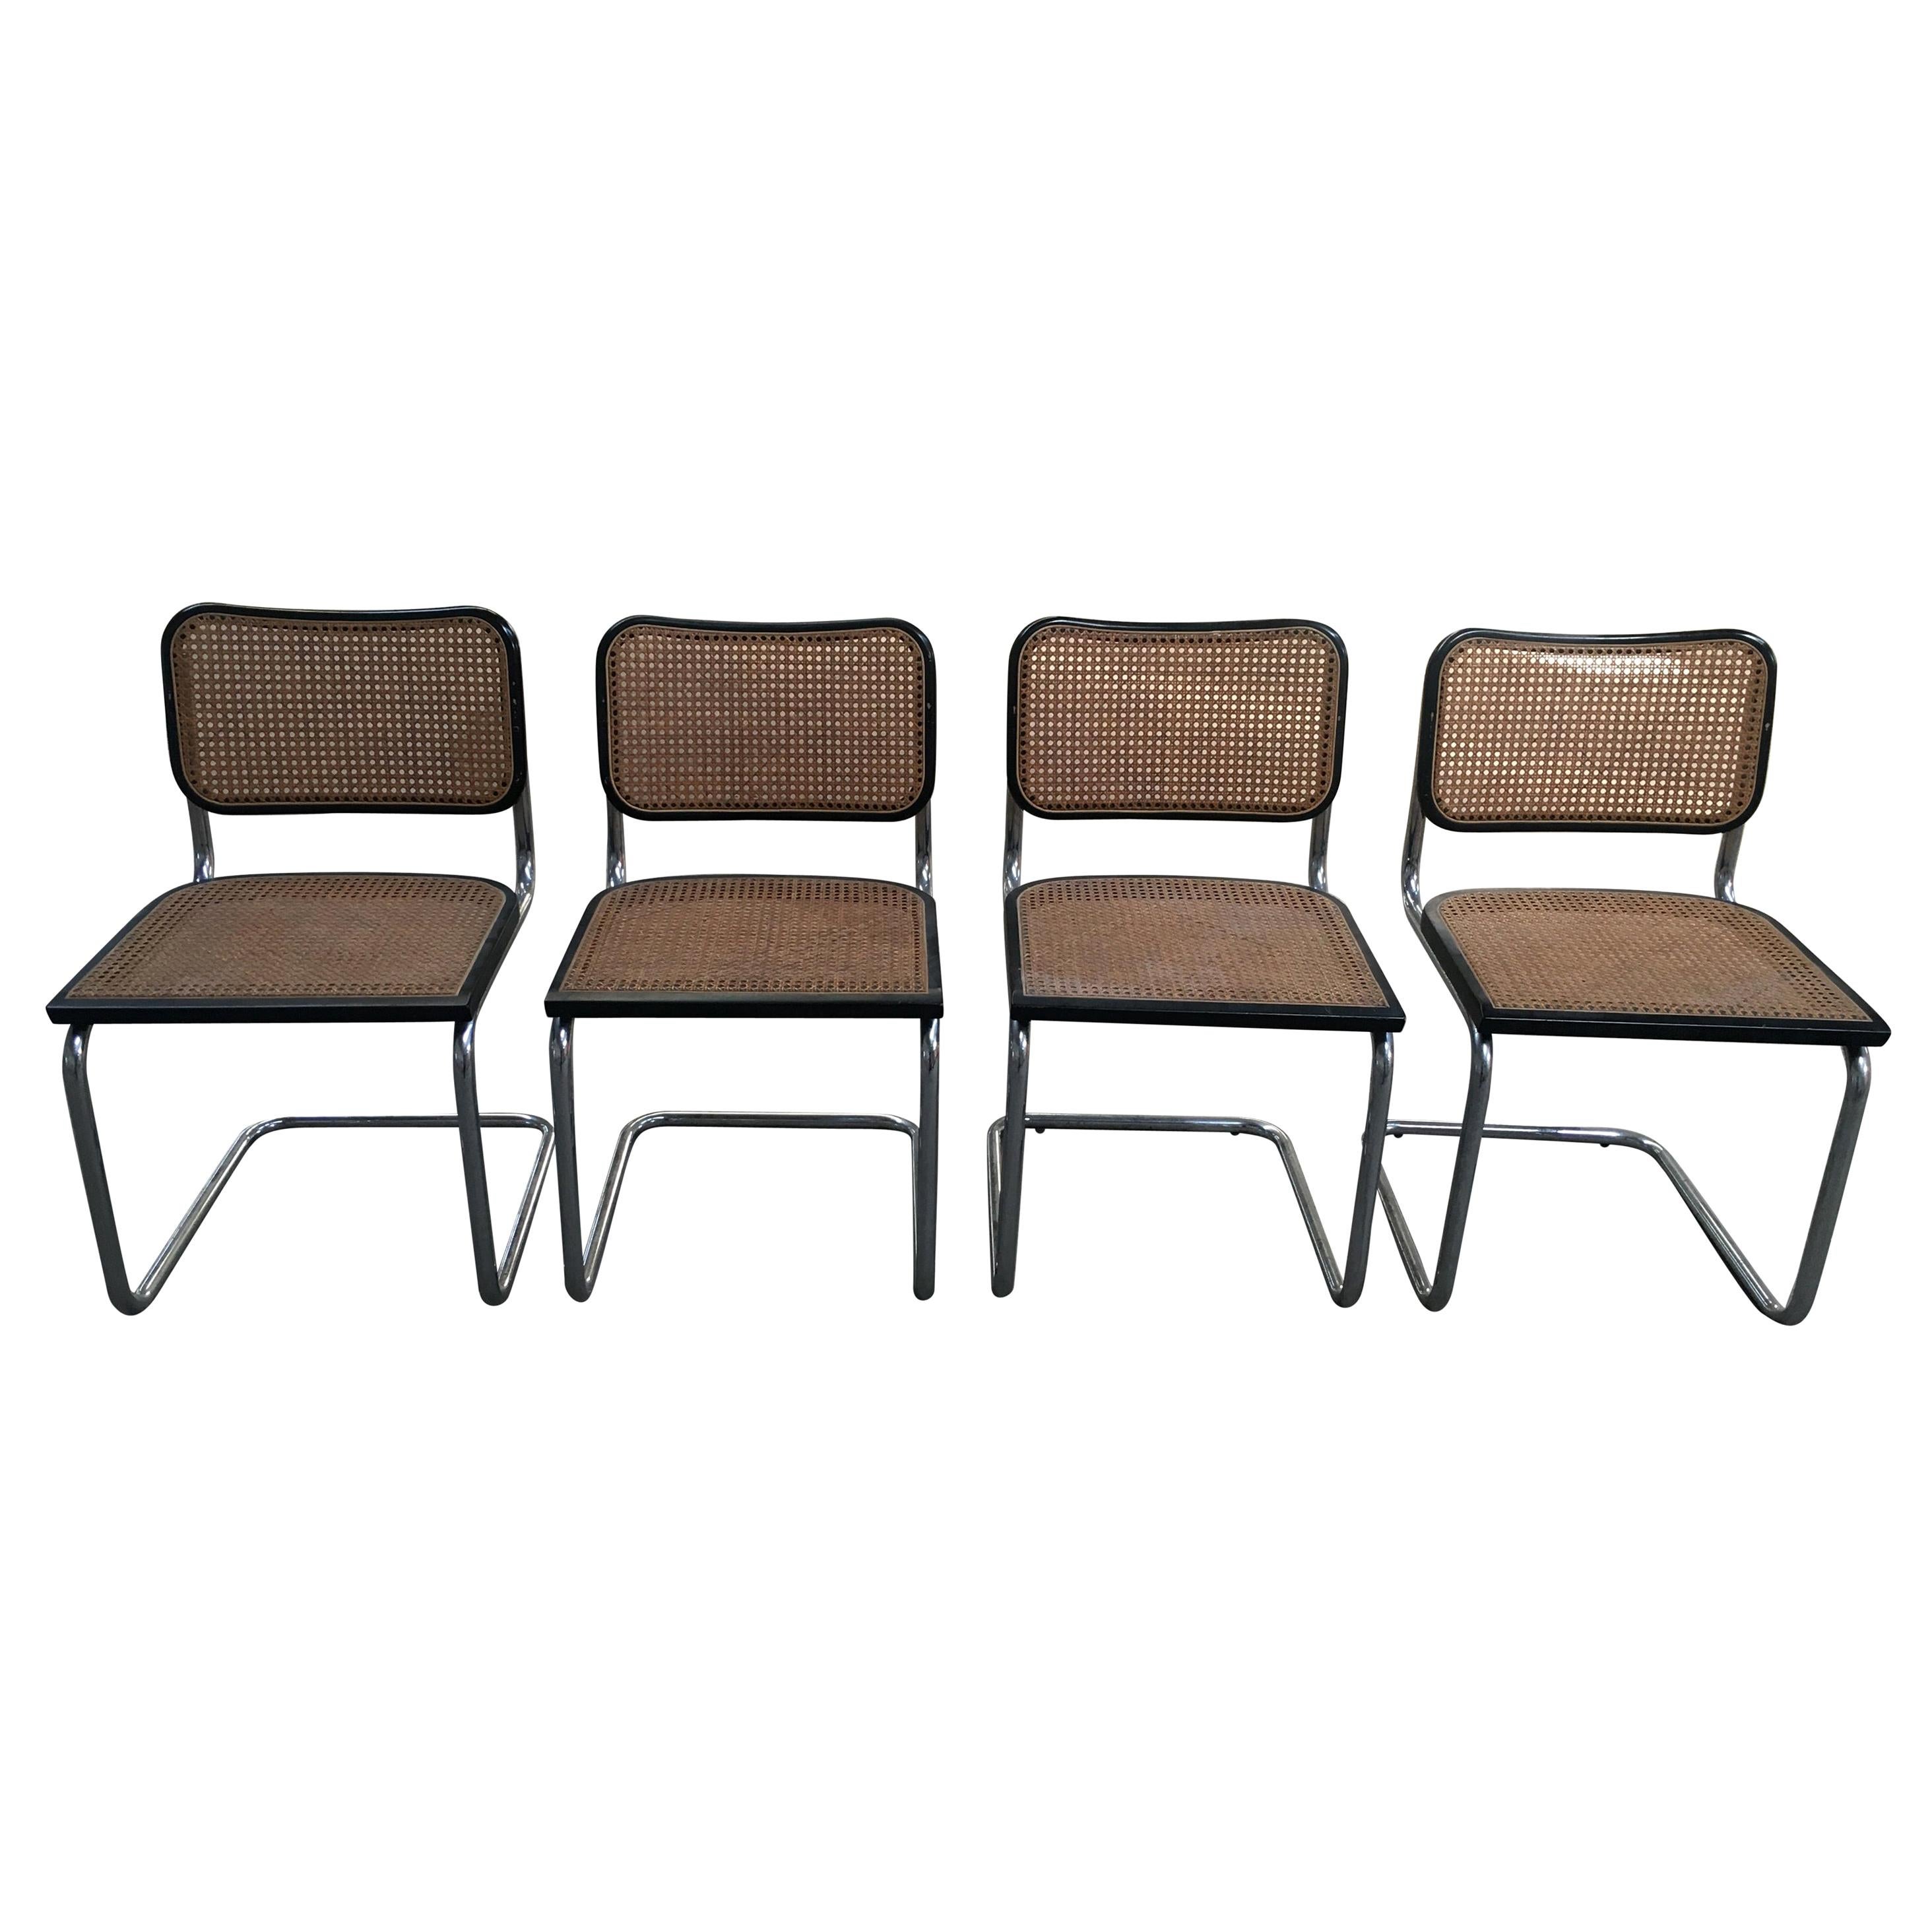 Mid-Century Modern Italian Set of 4 Chrome "Cesca" Chairs, 1970s